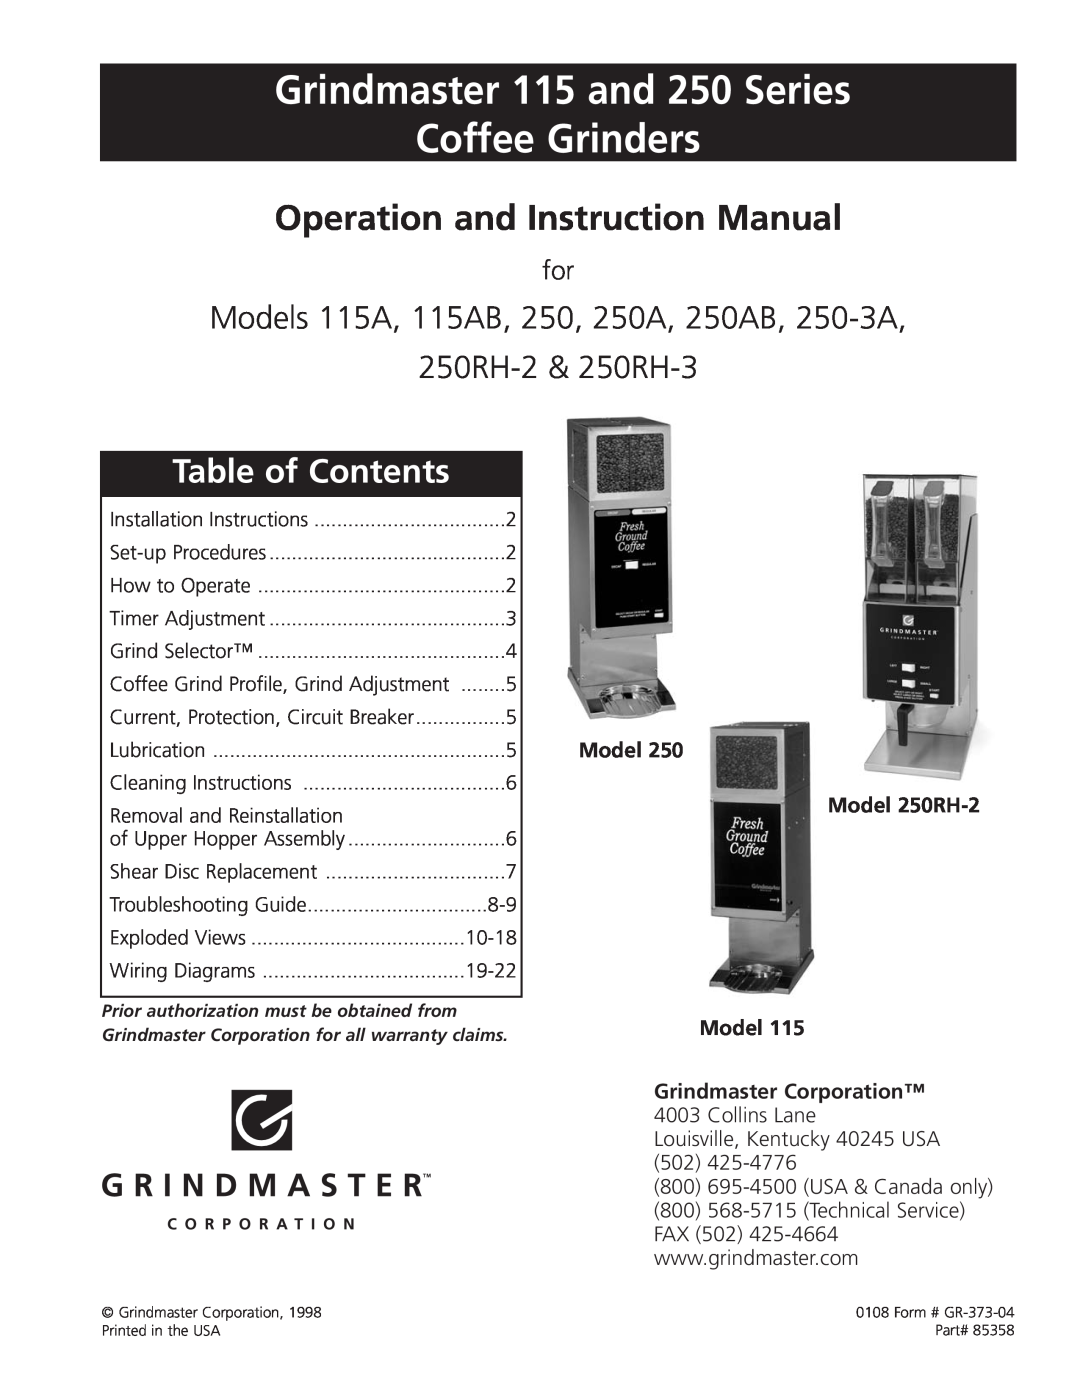 Grindmaster instruction manual Model Model 250RH-2 Model Grindmaster Corporation, Table of Contents, Exploded Views 